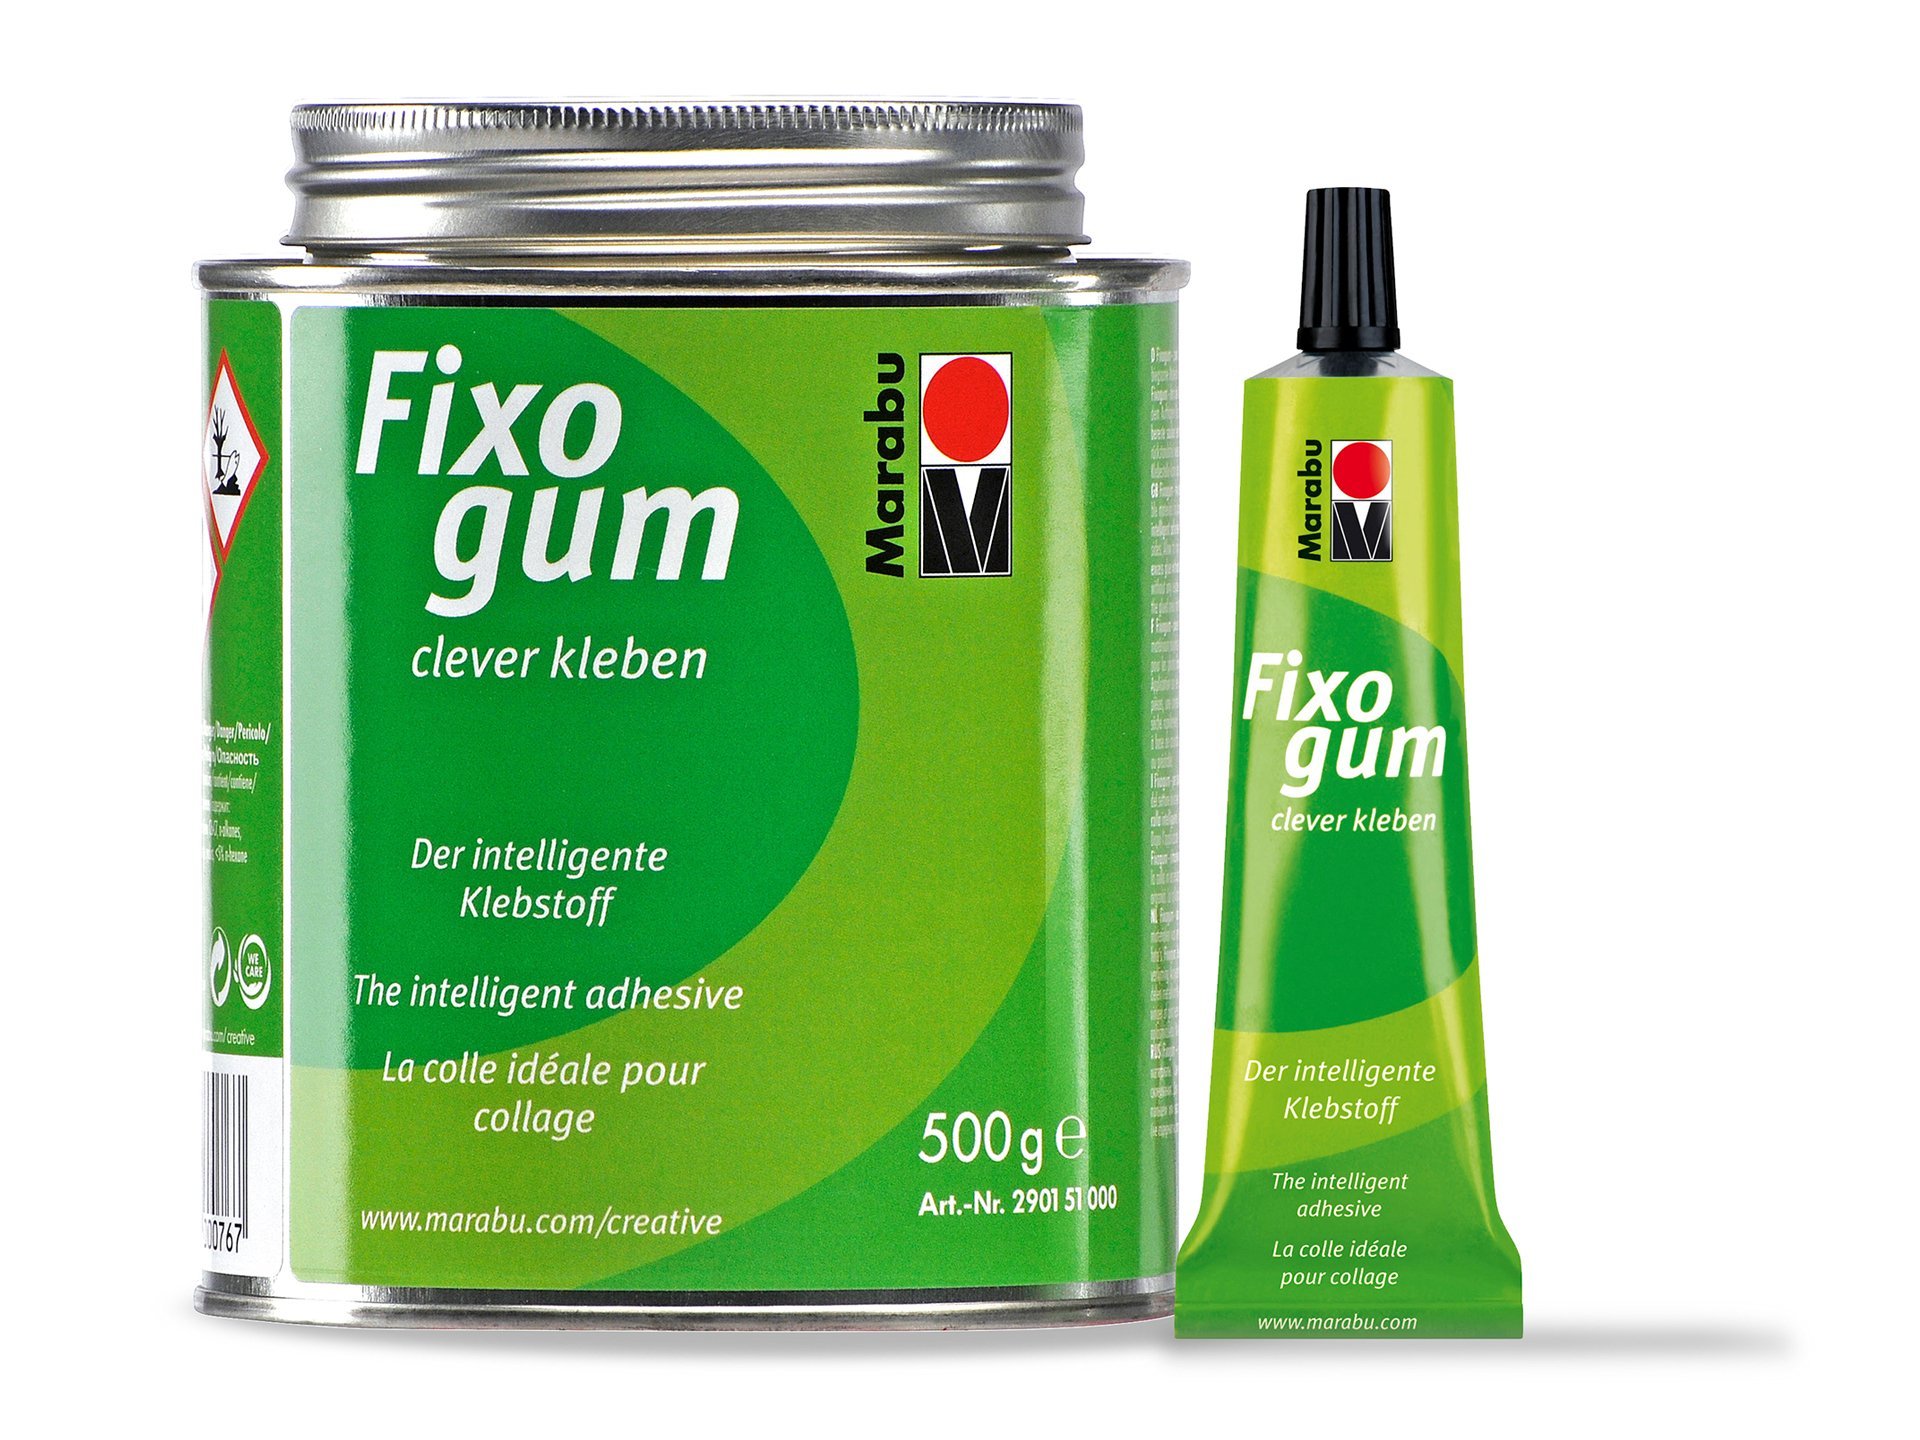 Buy Fixogum rubber cement online at Modulor